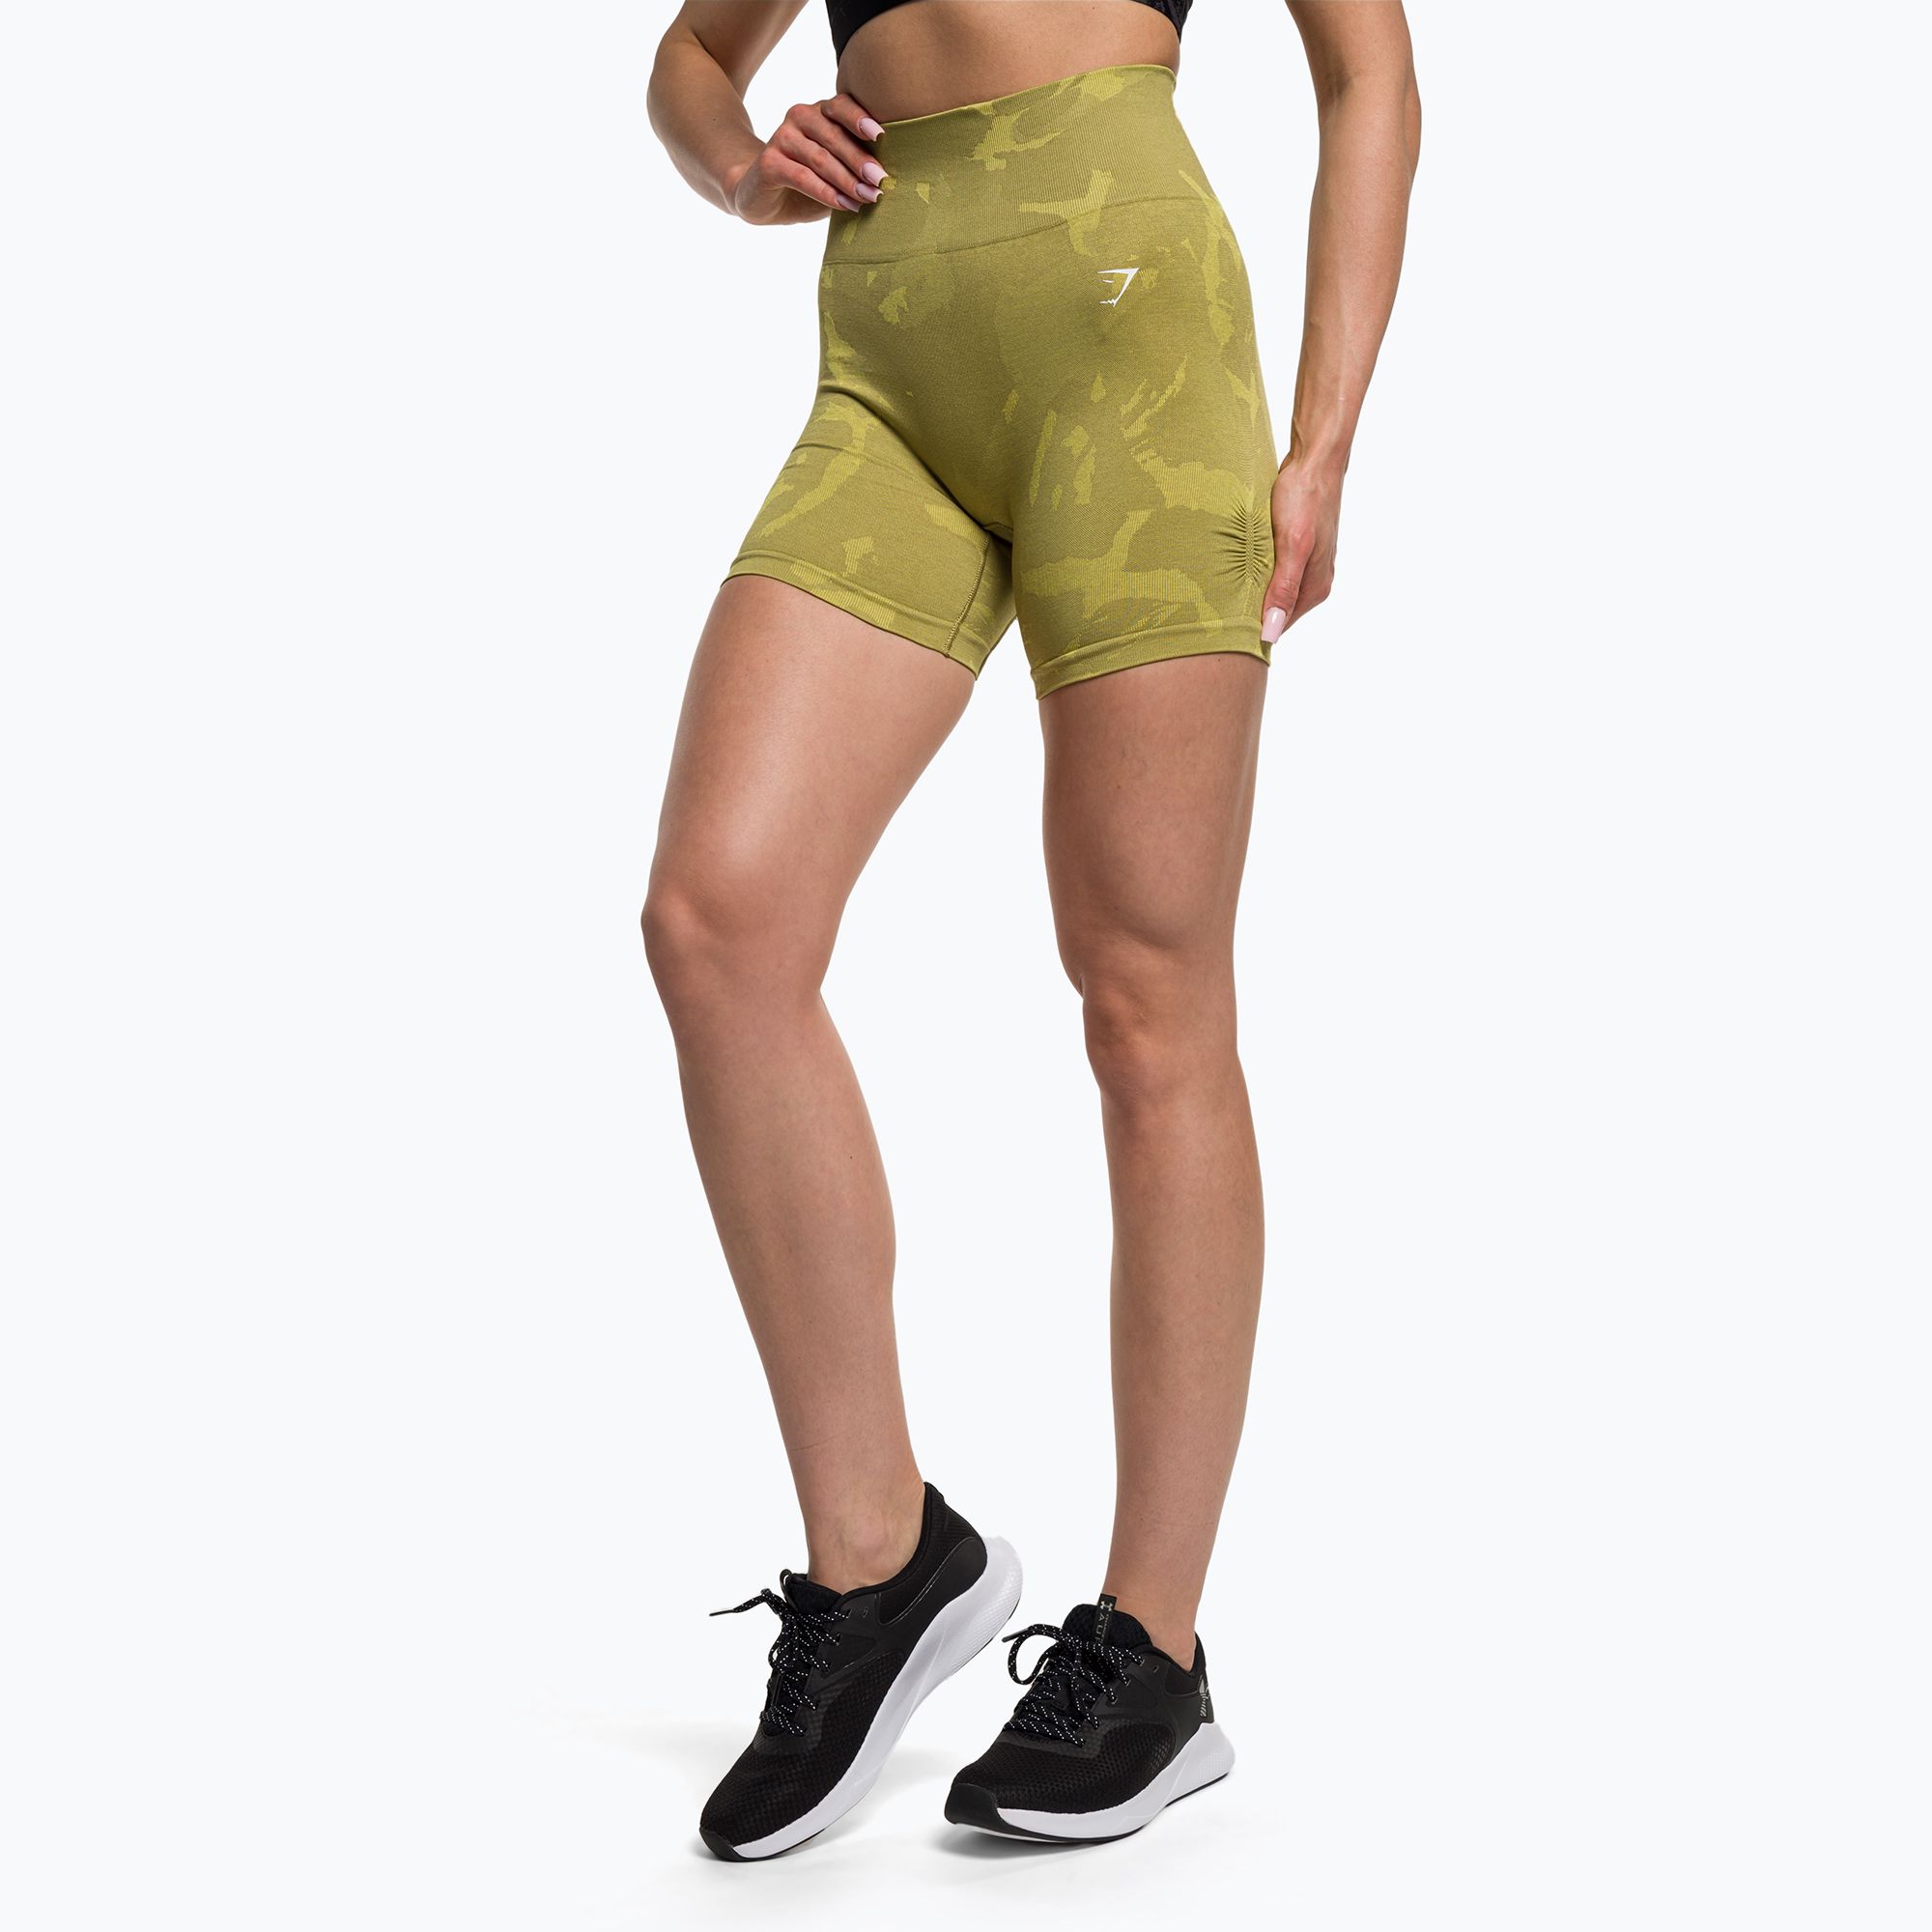 Women's training shorts Gymshark Adapt Camo Savanna Seamless green 